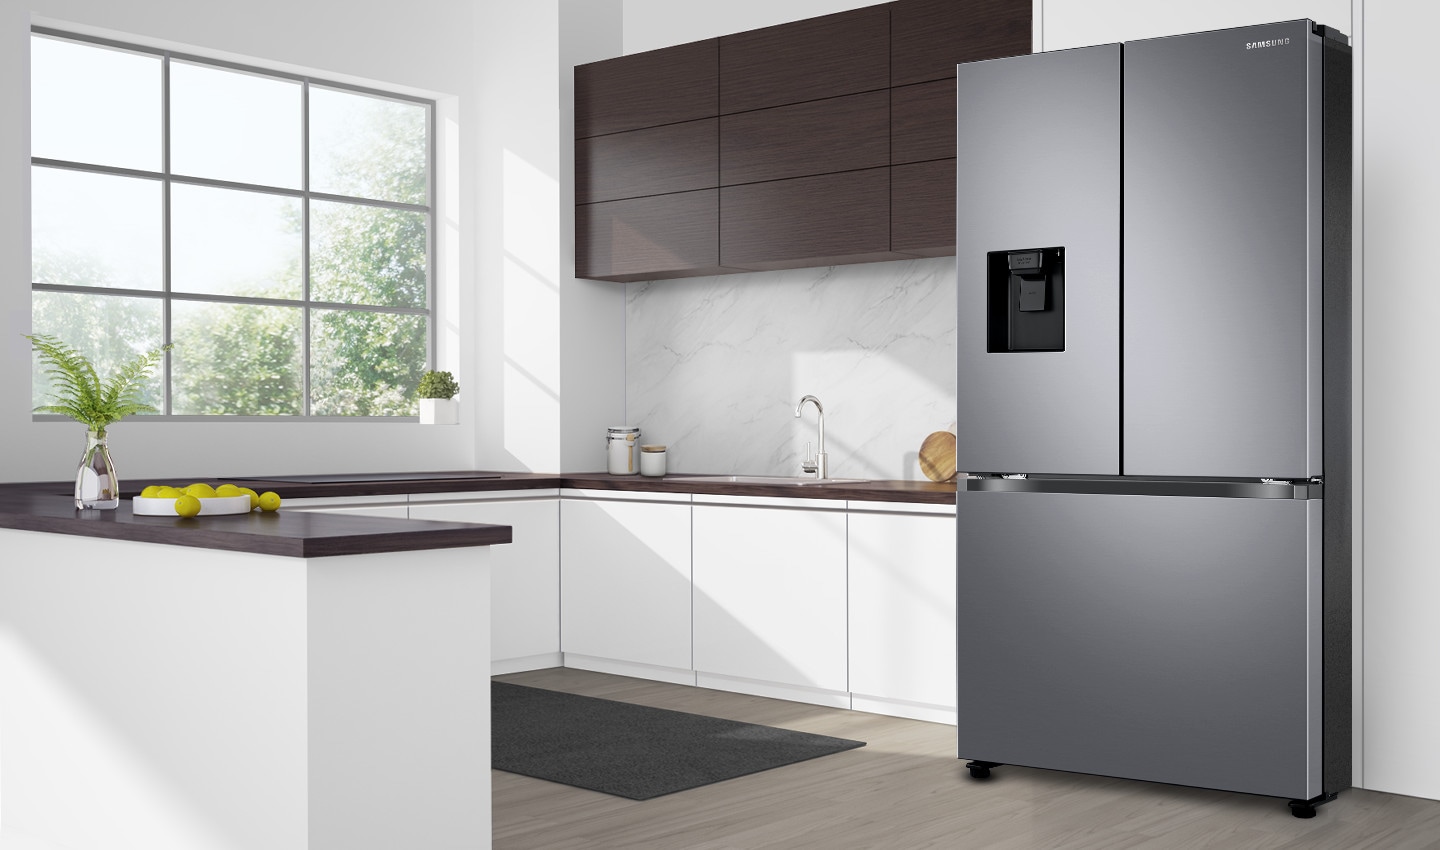 SAMSUNG French Refrigerator 470L A+ - Black